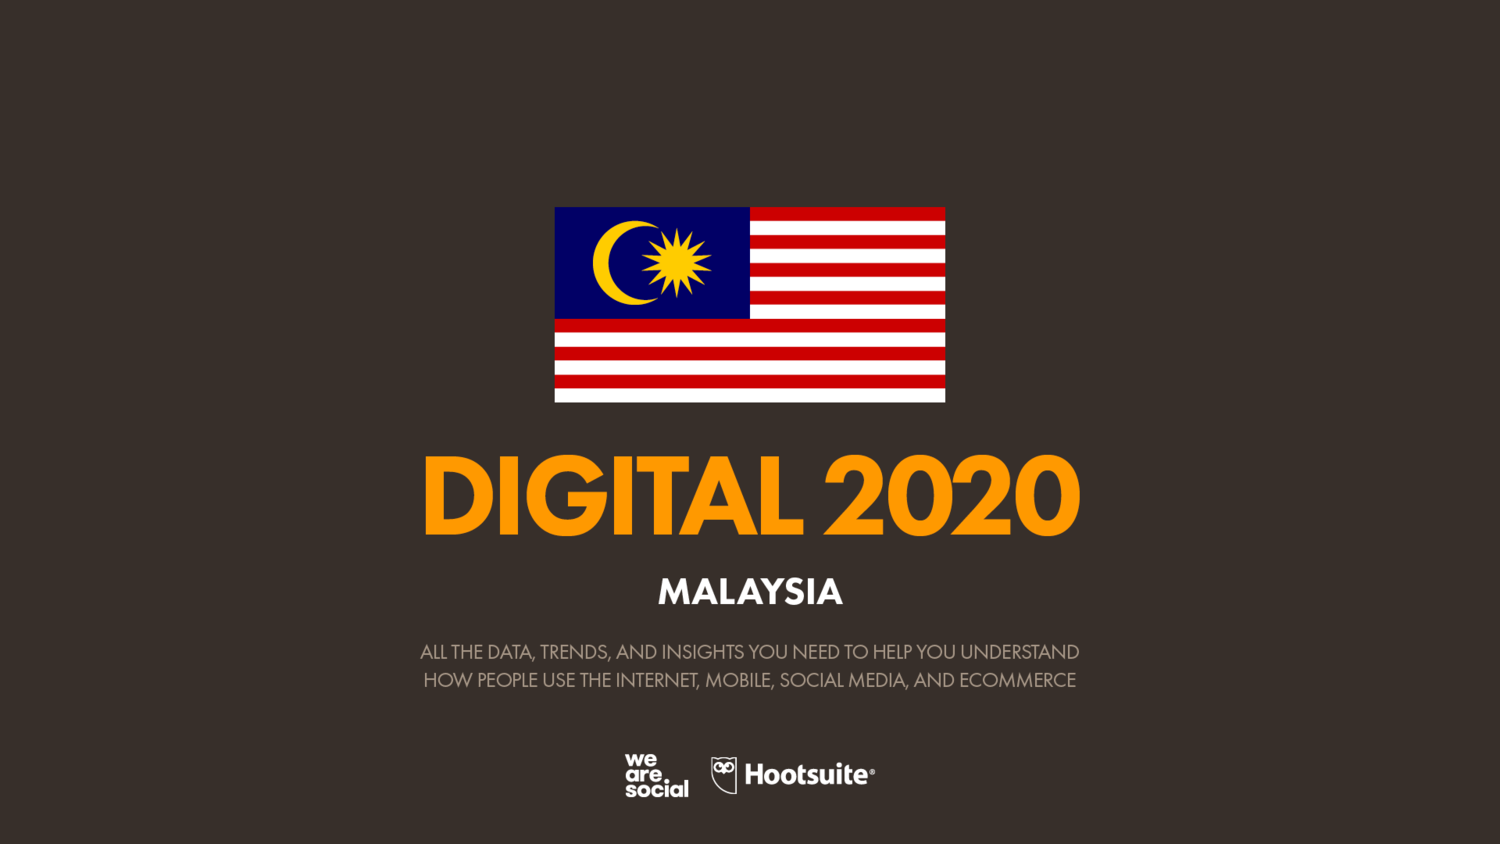 Digital 2020 Malaysia Datareportal Global Digital Insights